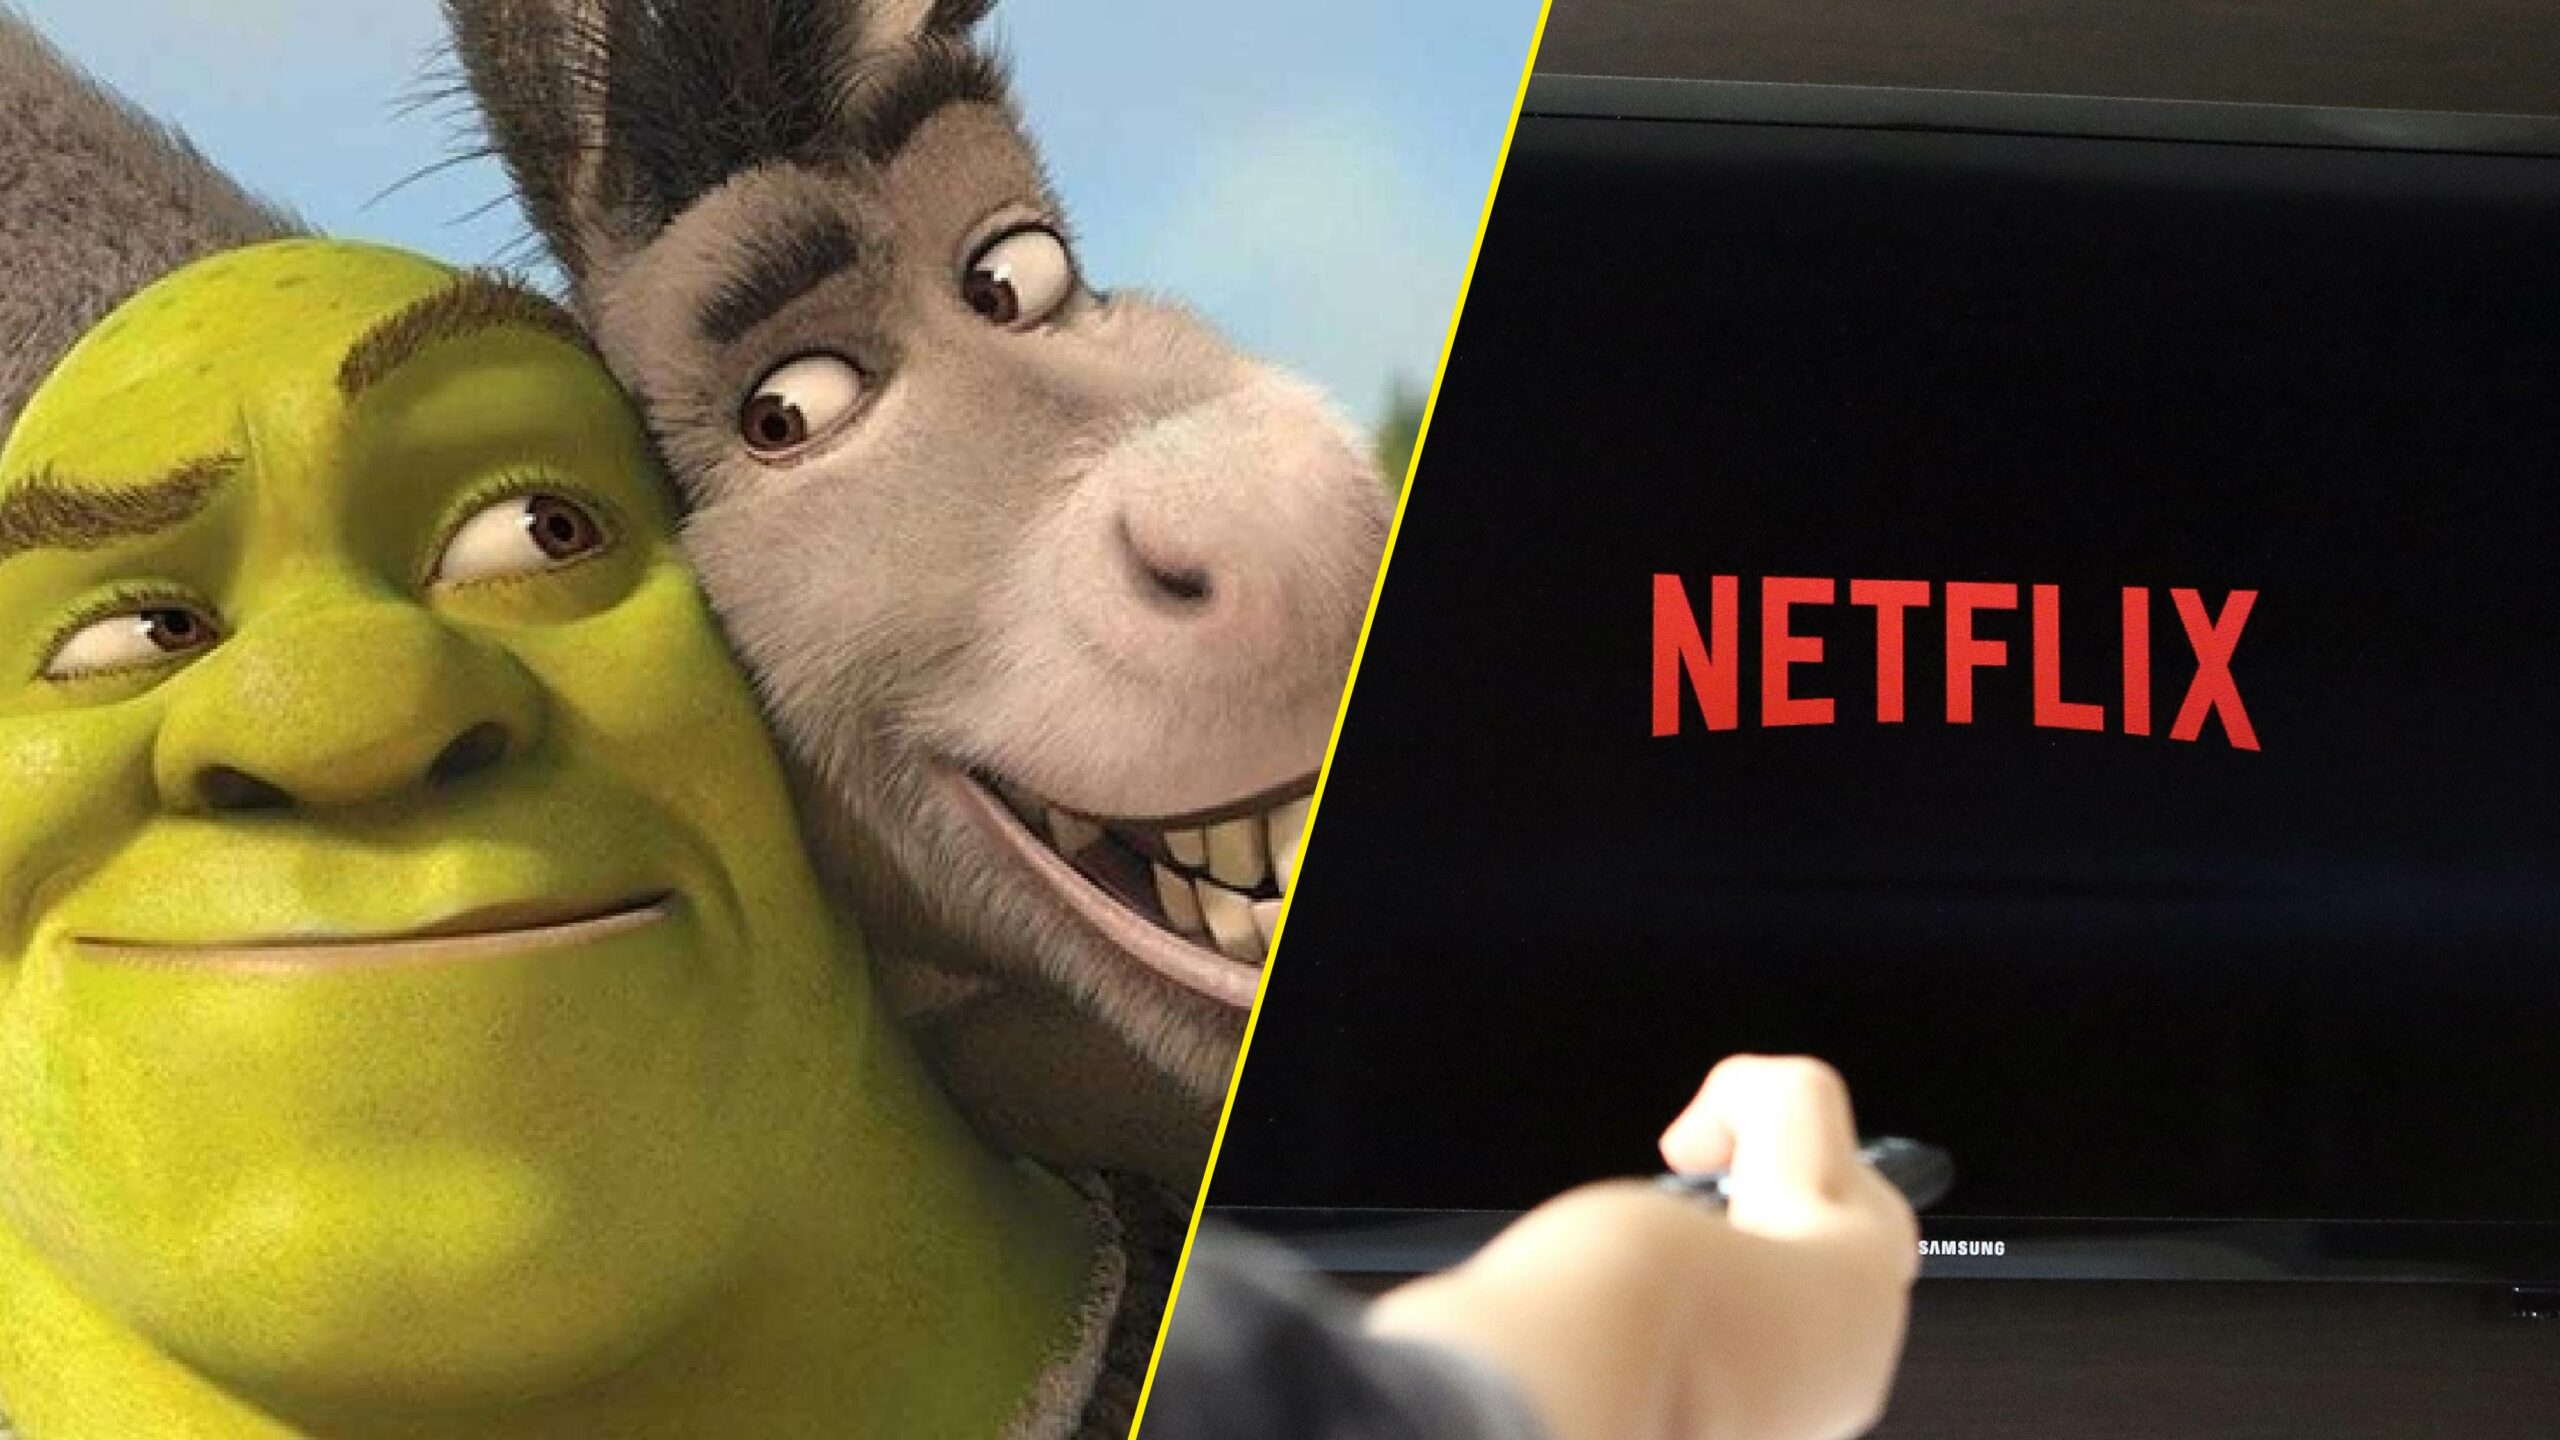 Every single Shrek film is now on Netflix